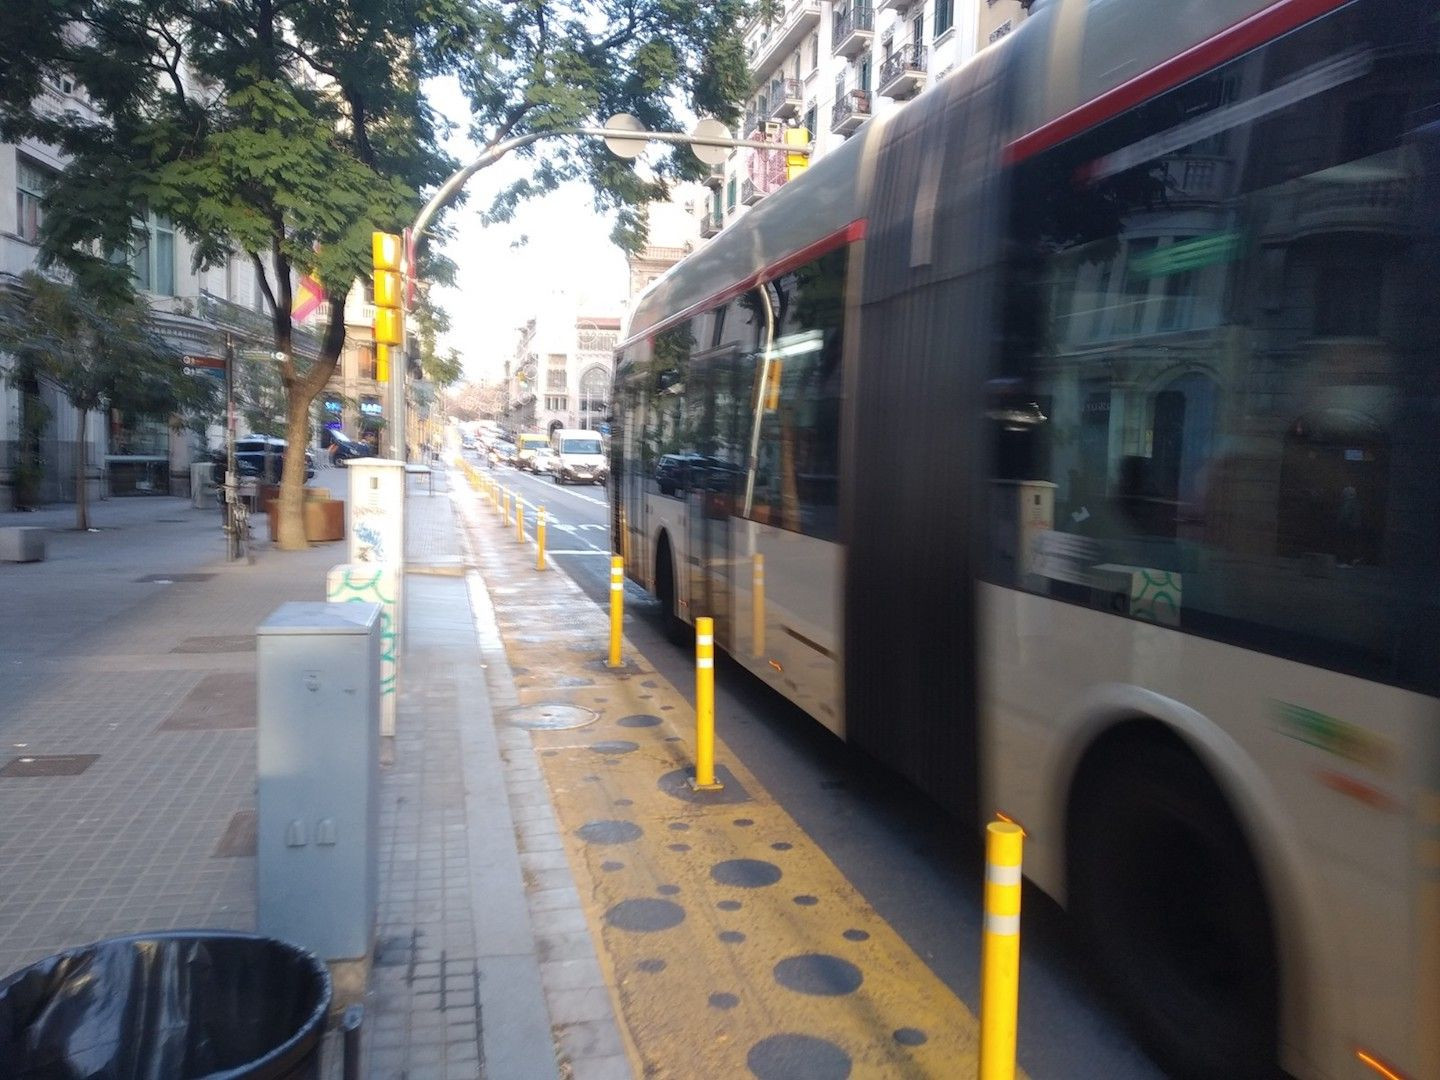 Un bus de TMB pasa junto al carril peatonal en calzada de Via Laietana, vacío / METRÓPOLI - JORDI SUBIRANA